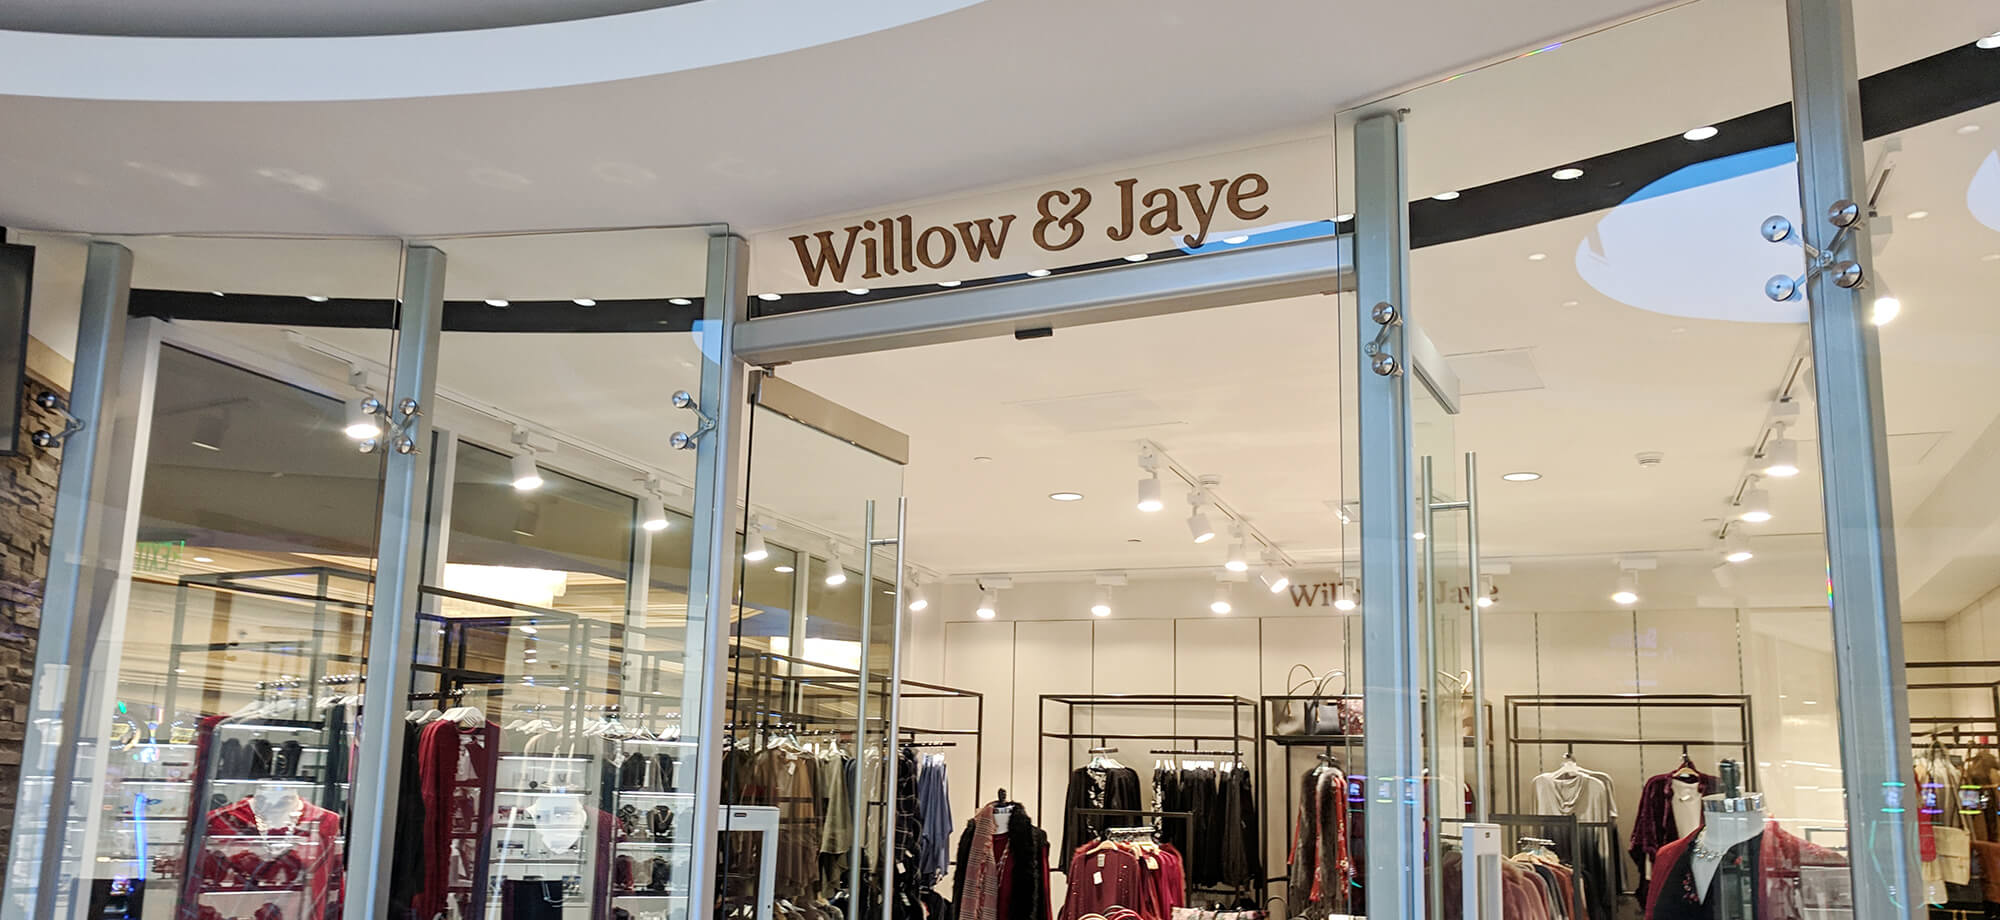 Willow & Jaye Signage